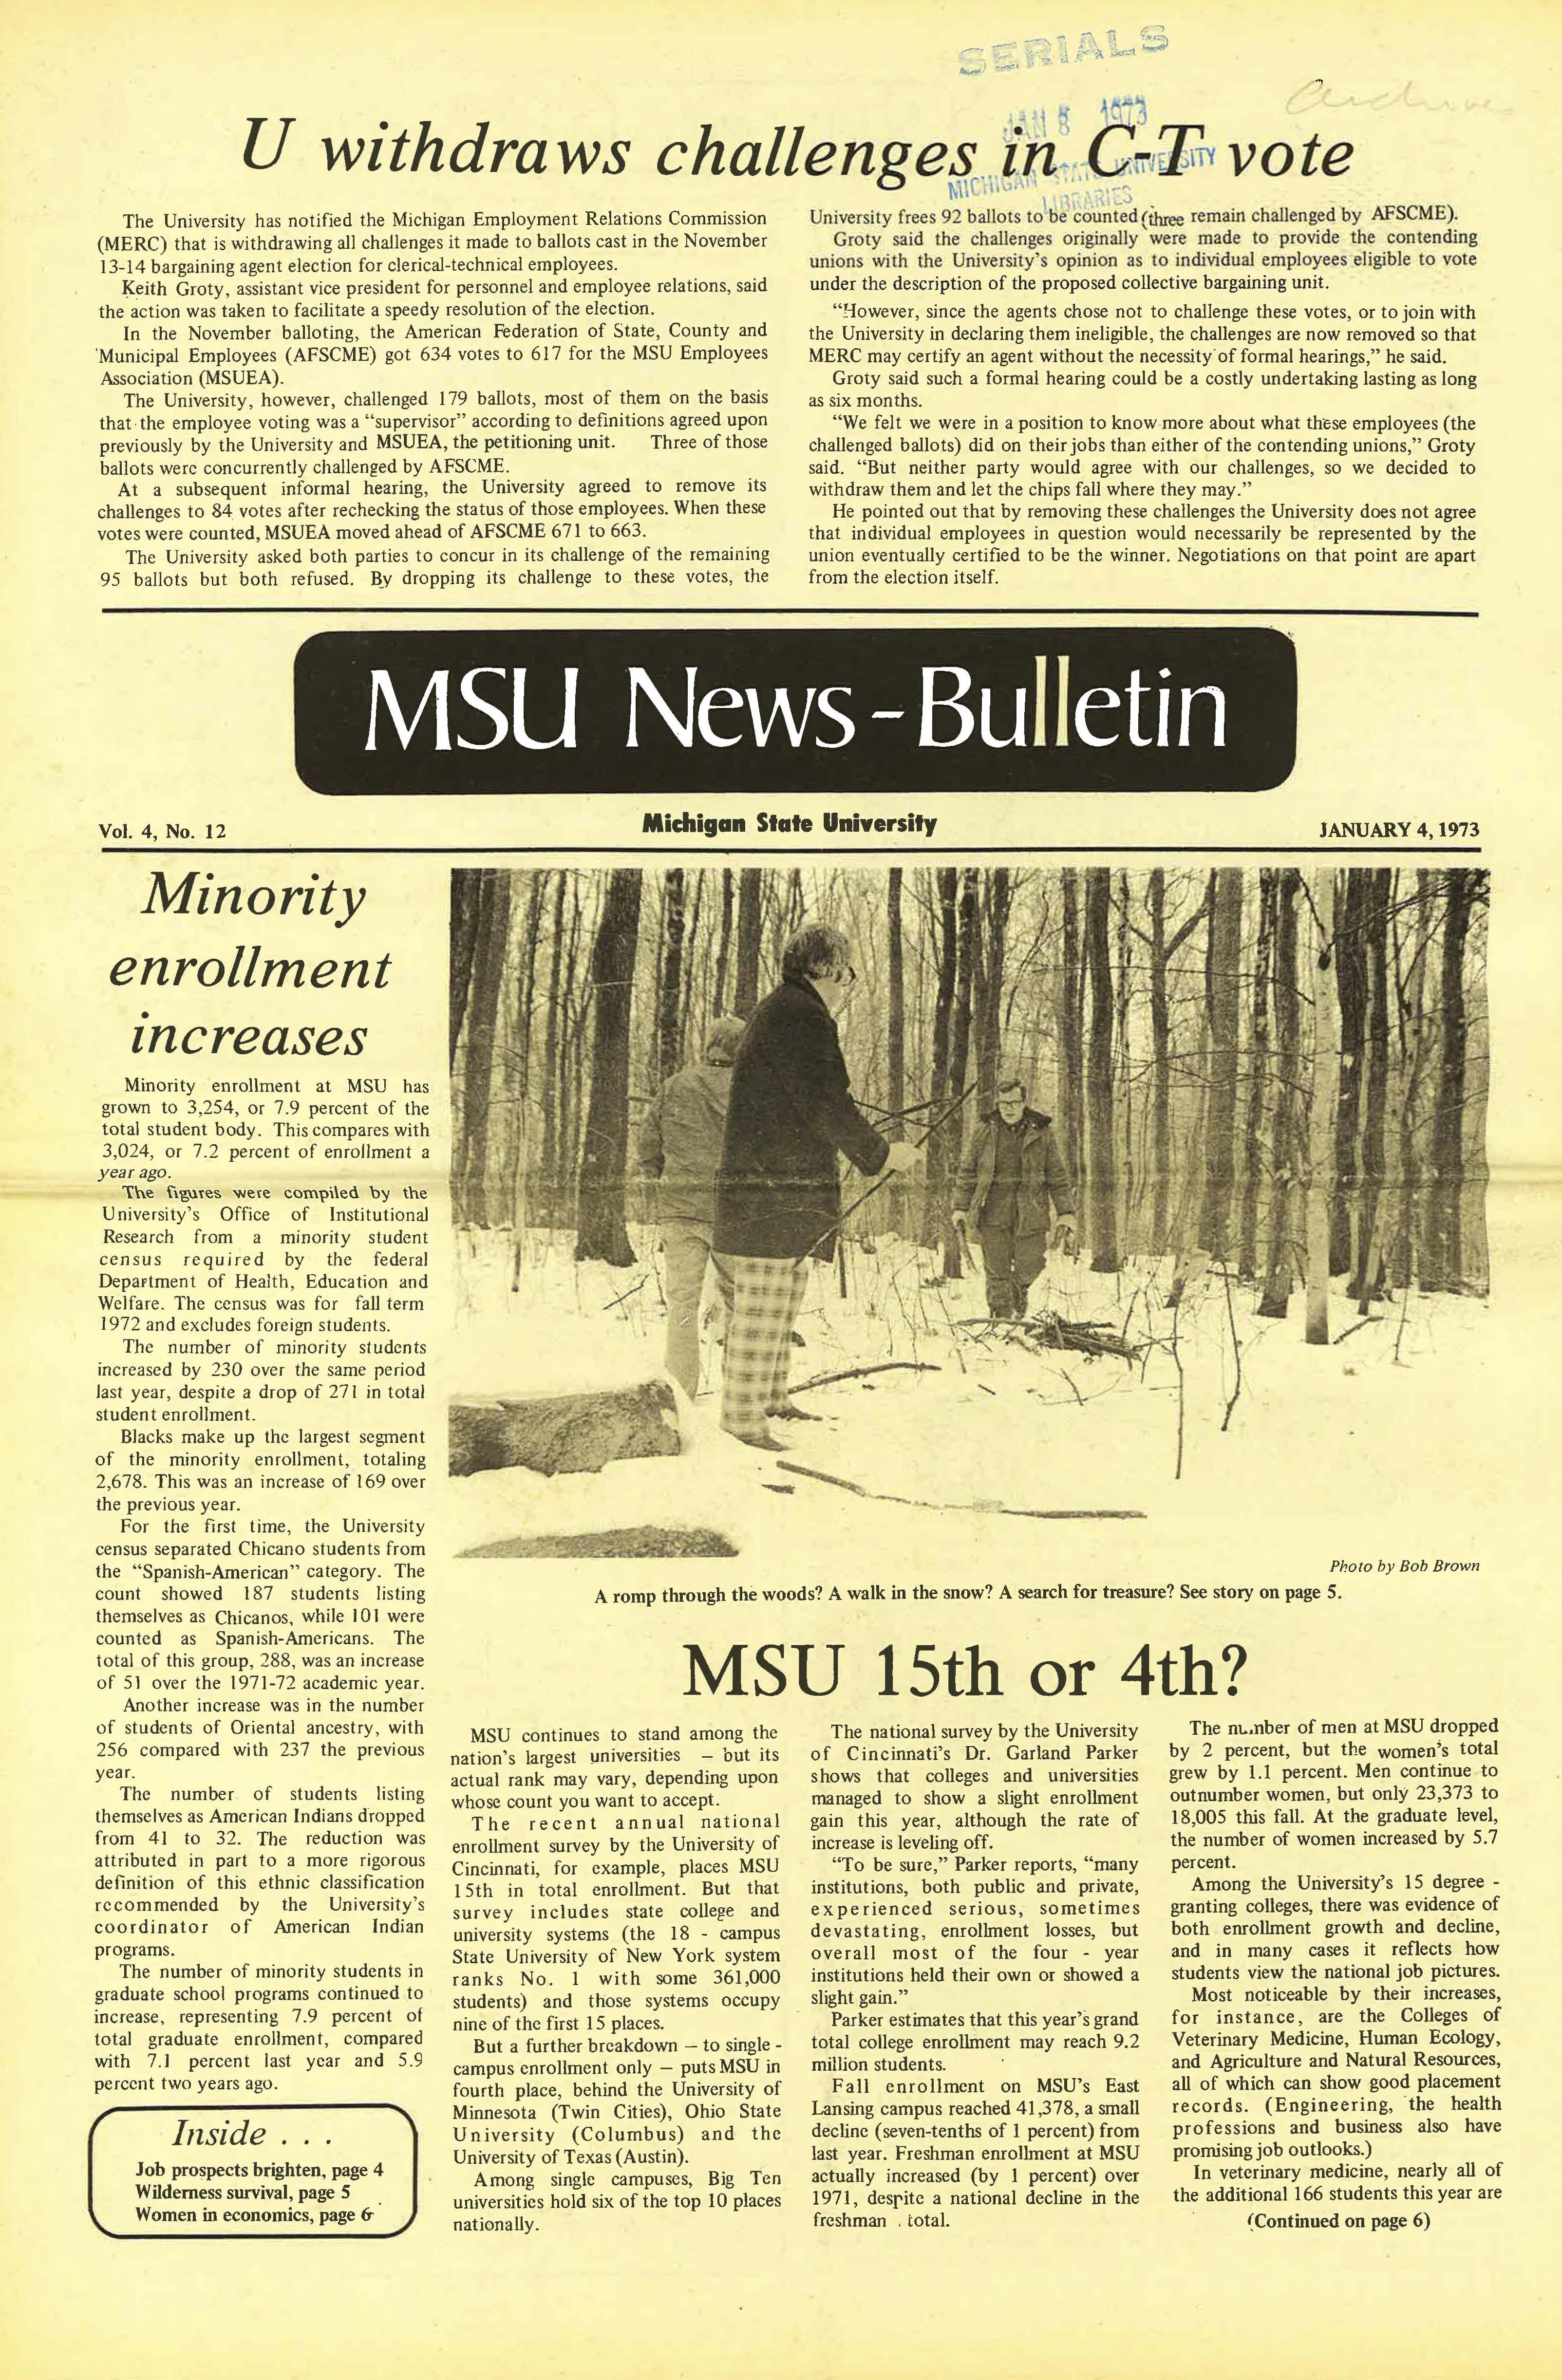 MSU News Bulletin, vol. 4, No. 16, February 1, 1973